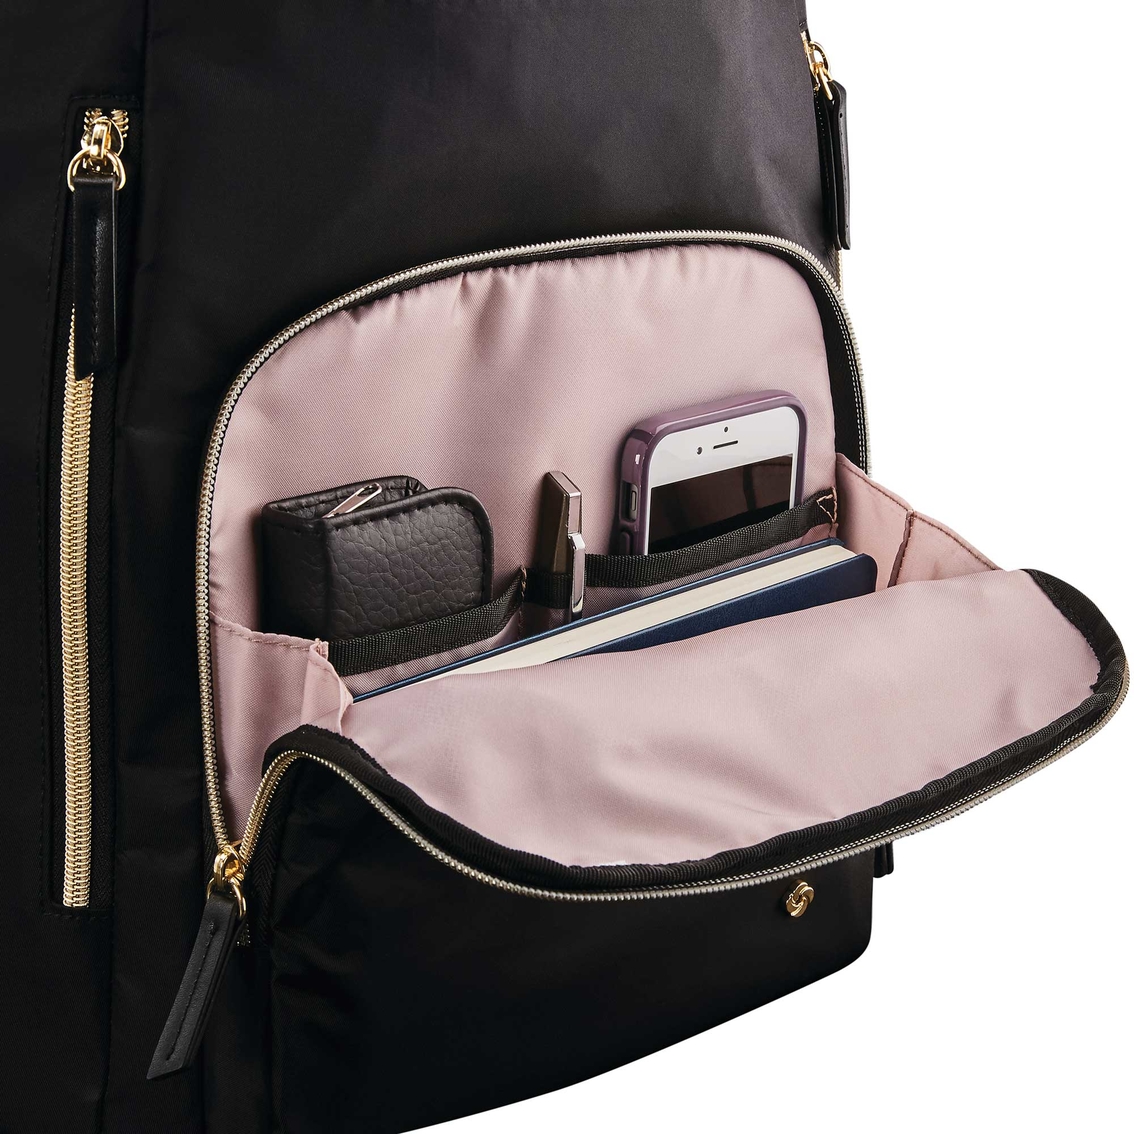 Samsonite Mobile Solution Deluxe Backpack - Image 6 of 10